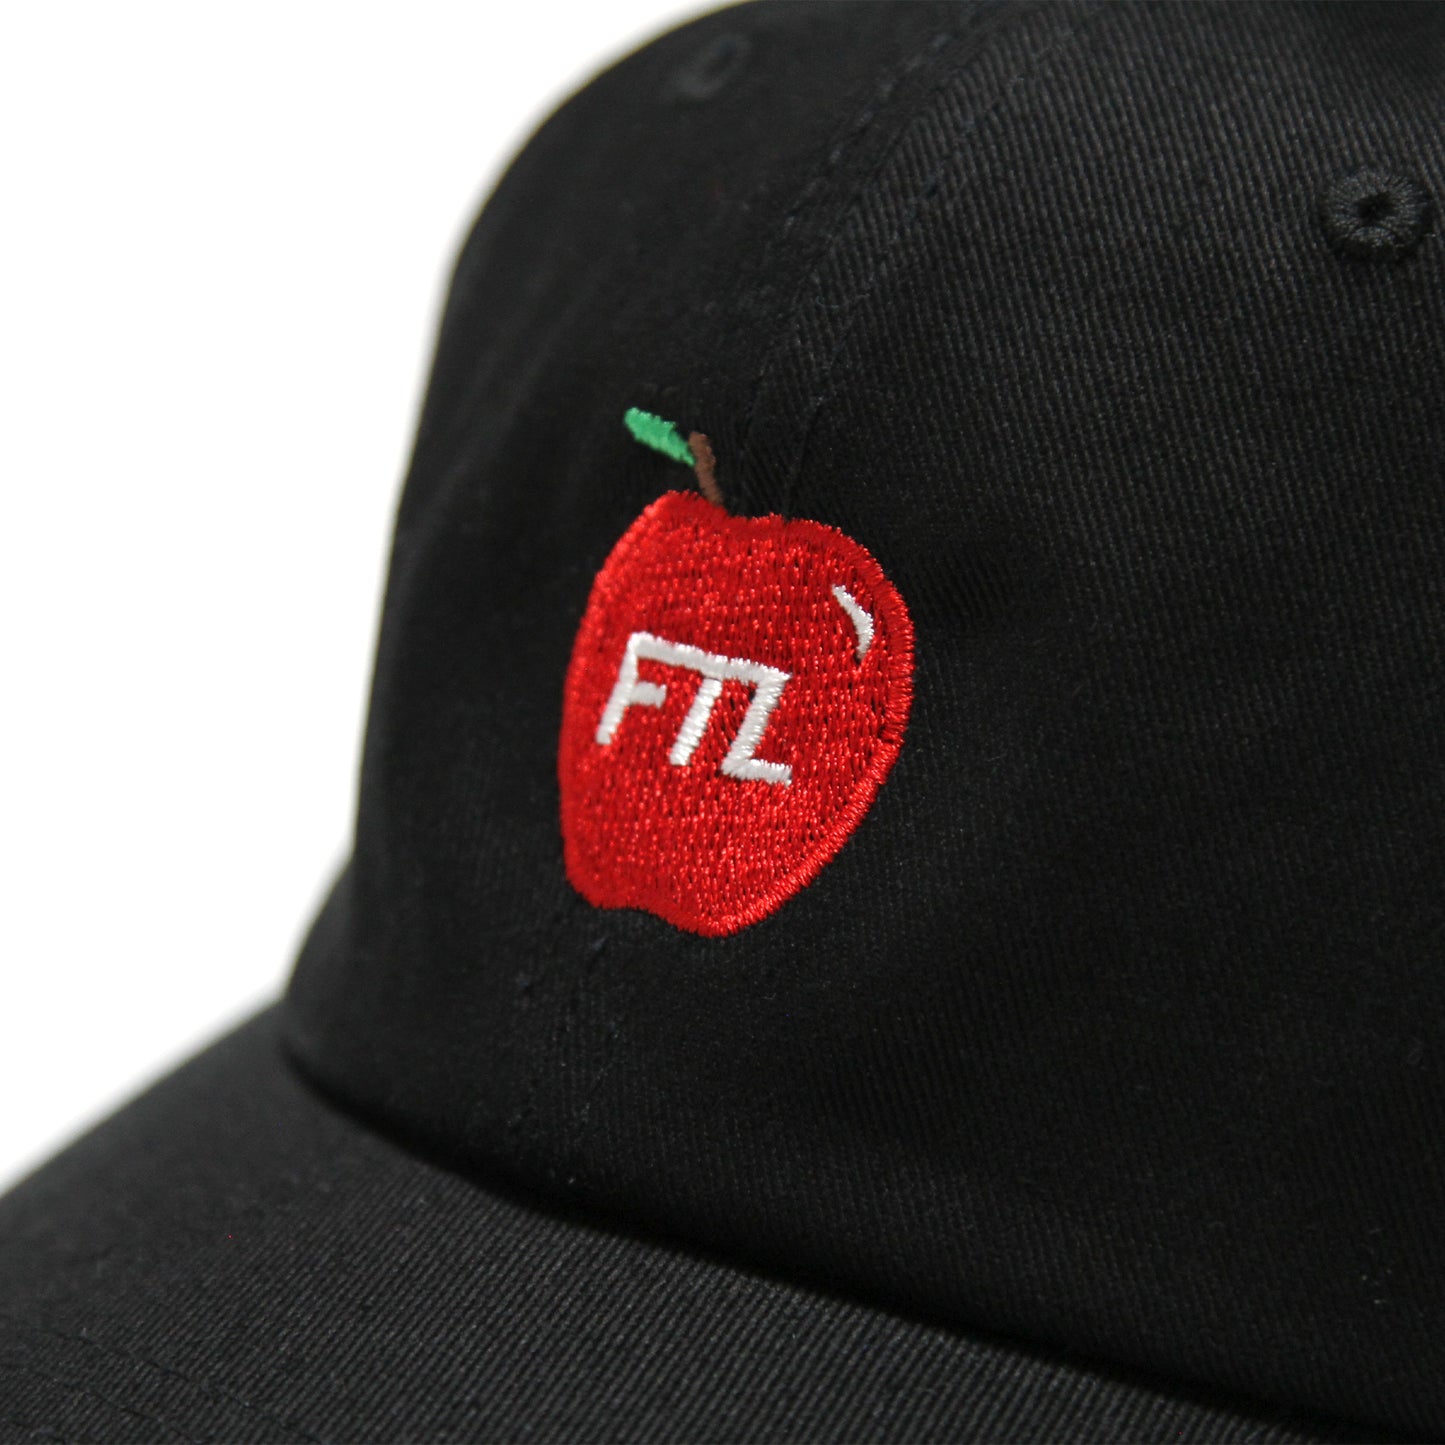 FTL - Apple Cap/Black